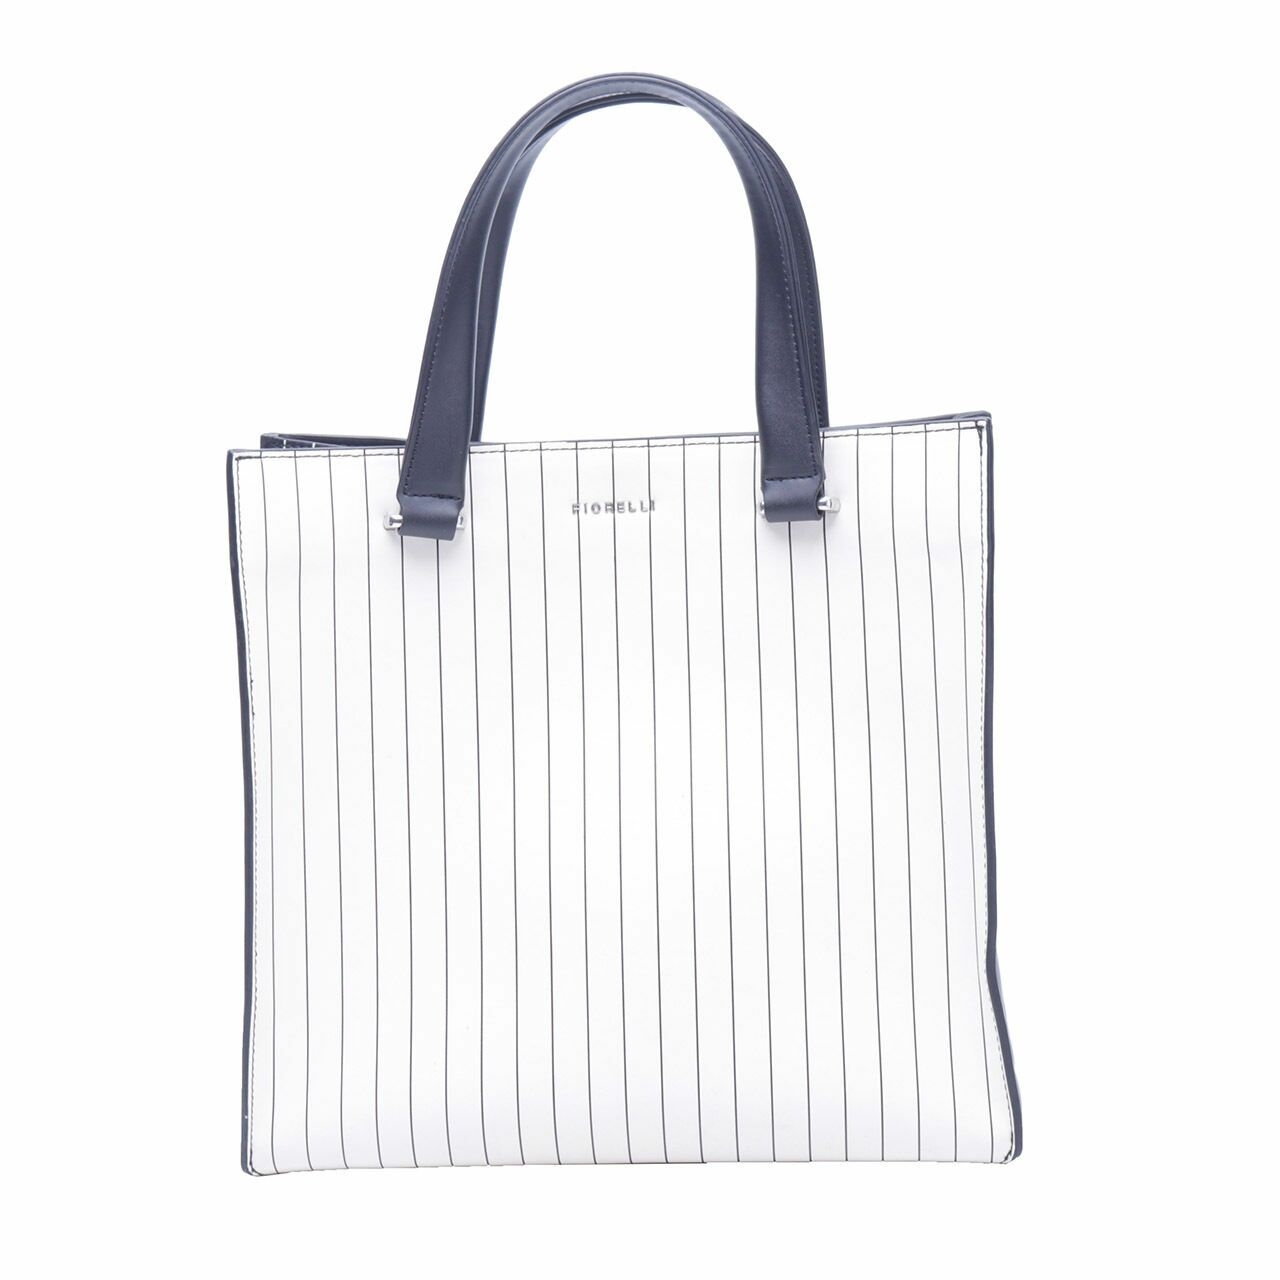 FIORELLI Black & White Stripes Tote Bag